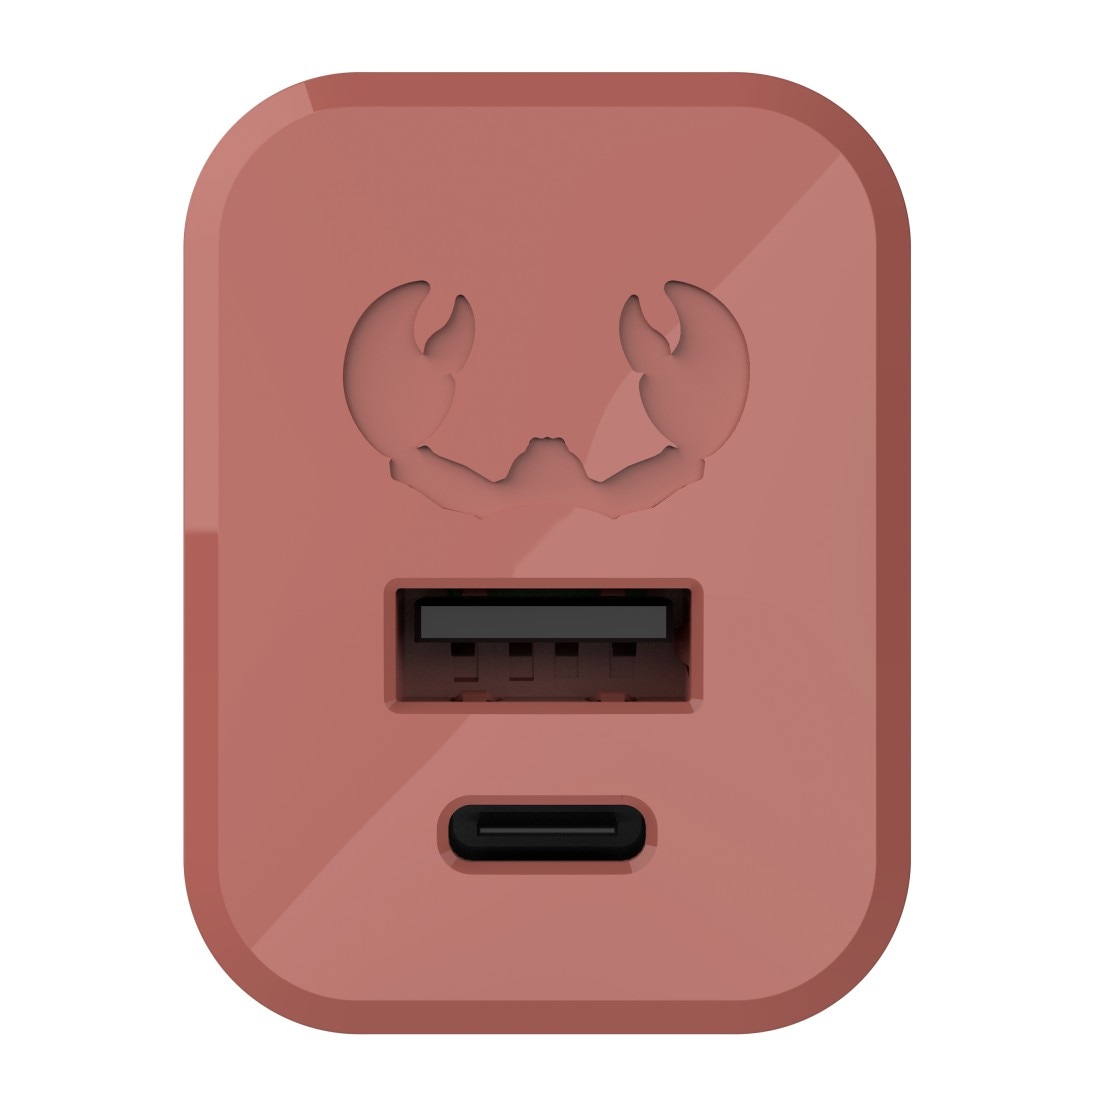 Fresh´n Rebel Schnelllade-Gerät »Mini-Charger USB-C- und USB-A, PD 45W, USB-C-Kabel 2m«, (2 St.)